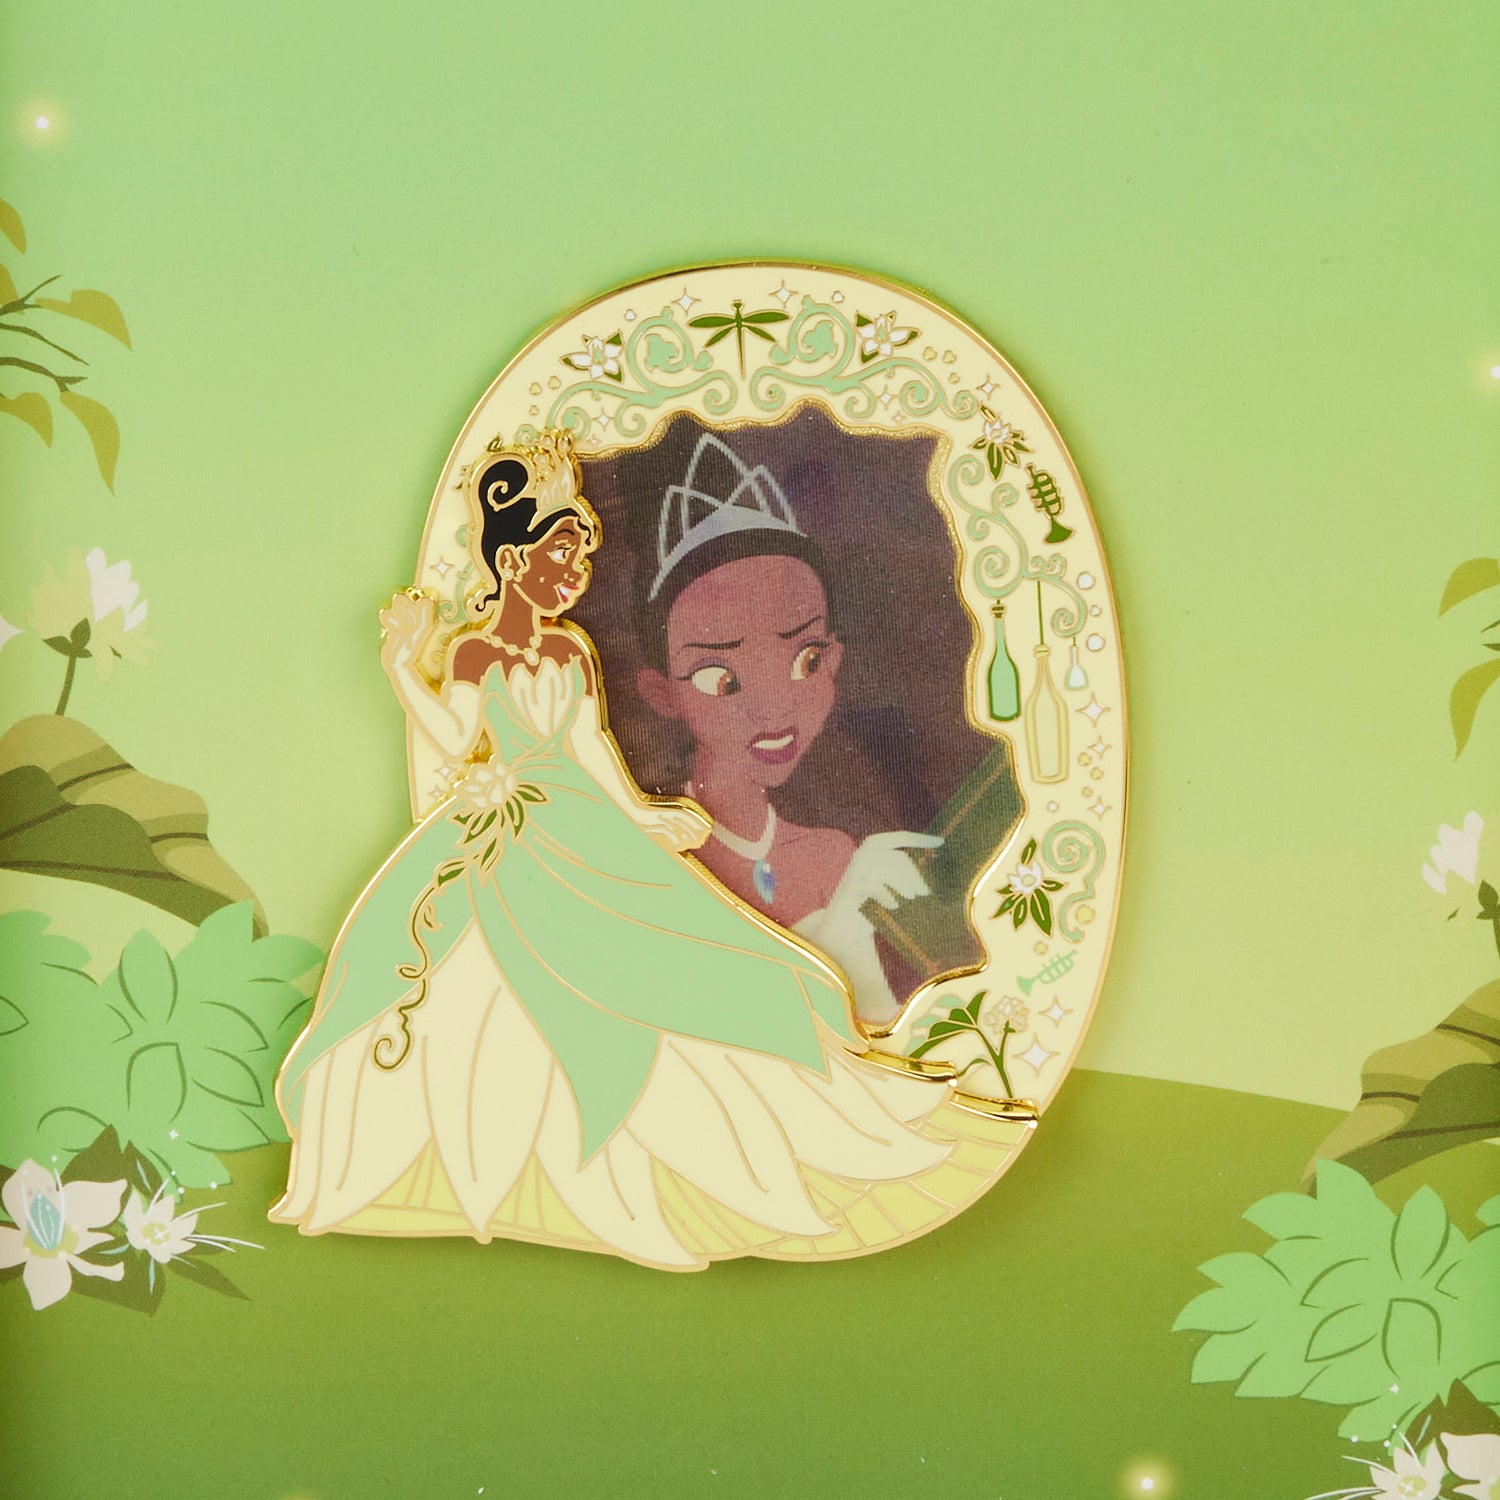 Loungefly x Disney Princess and The Frog Princess Tiana Lenticular 3-Inch Pin